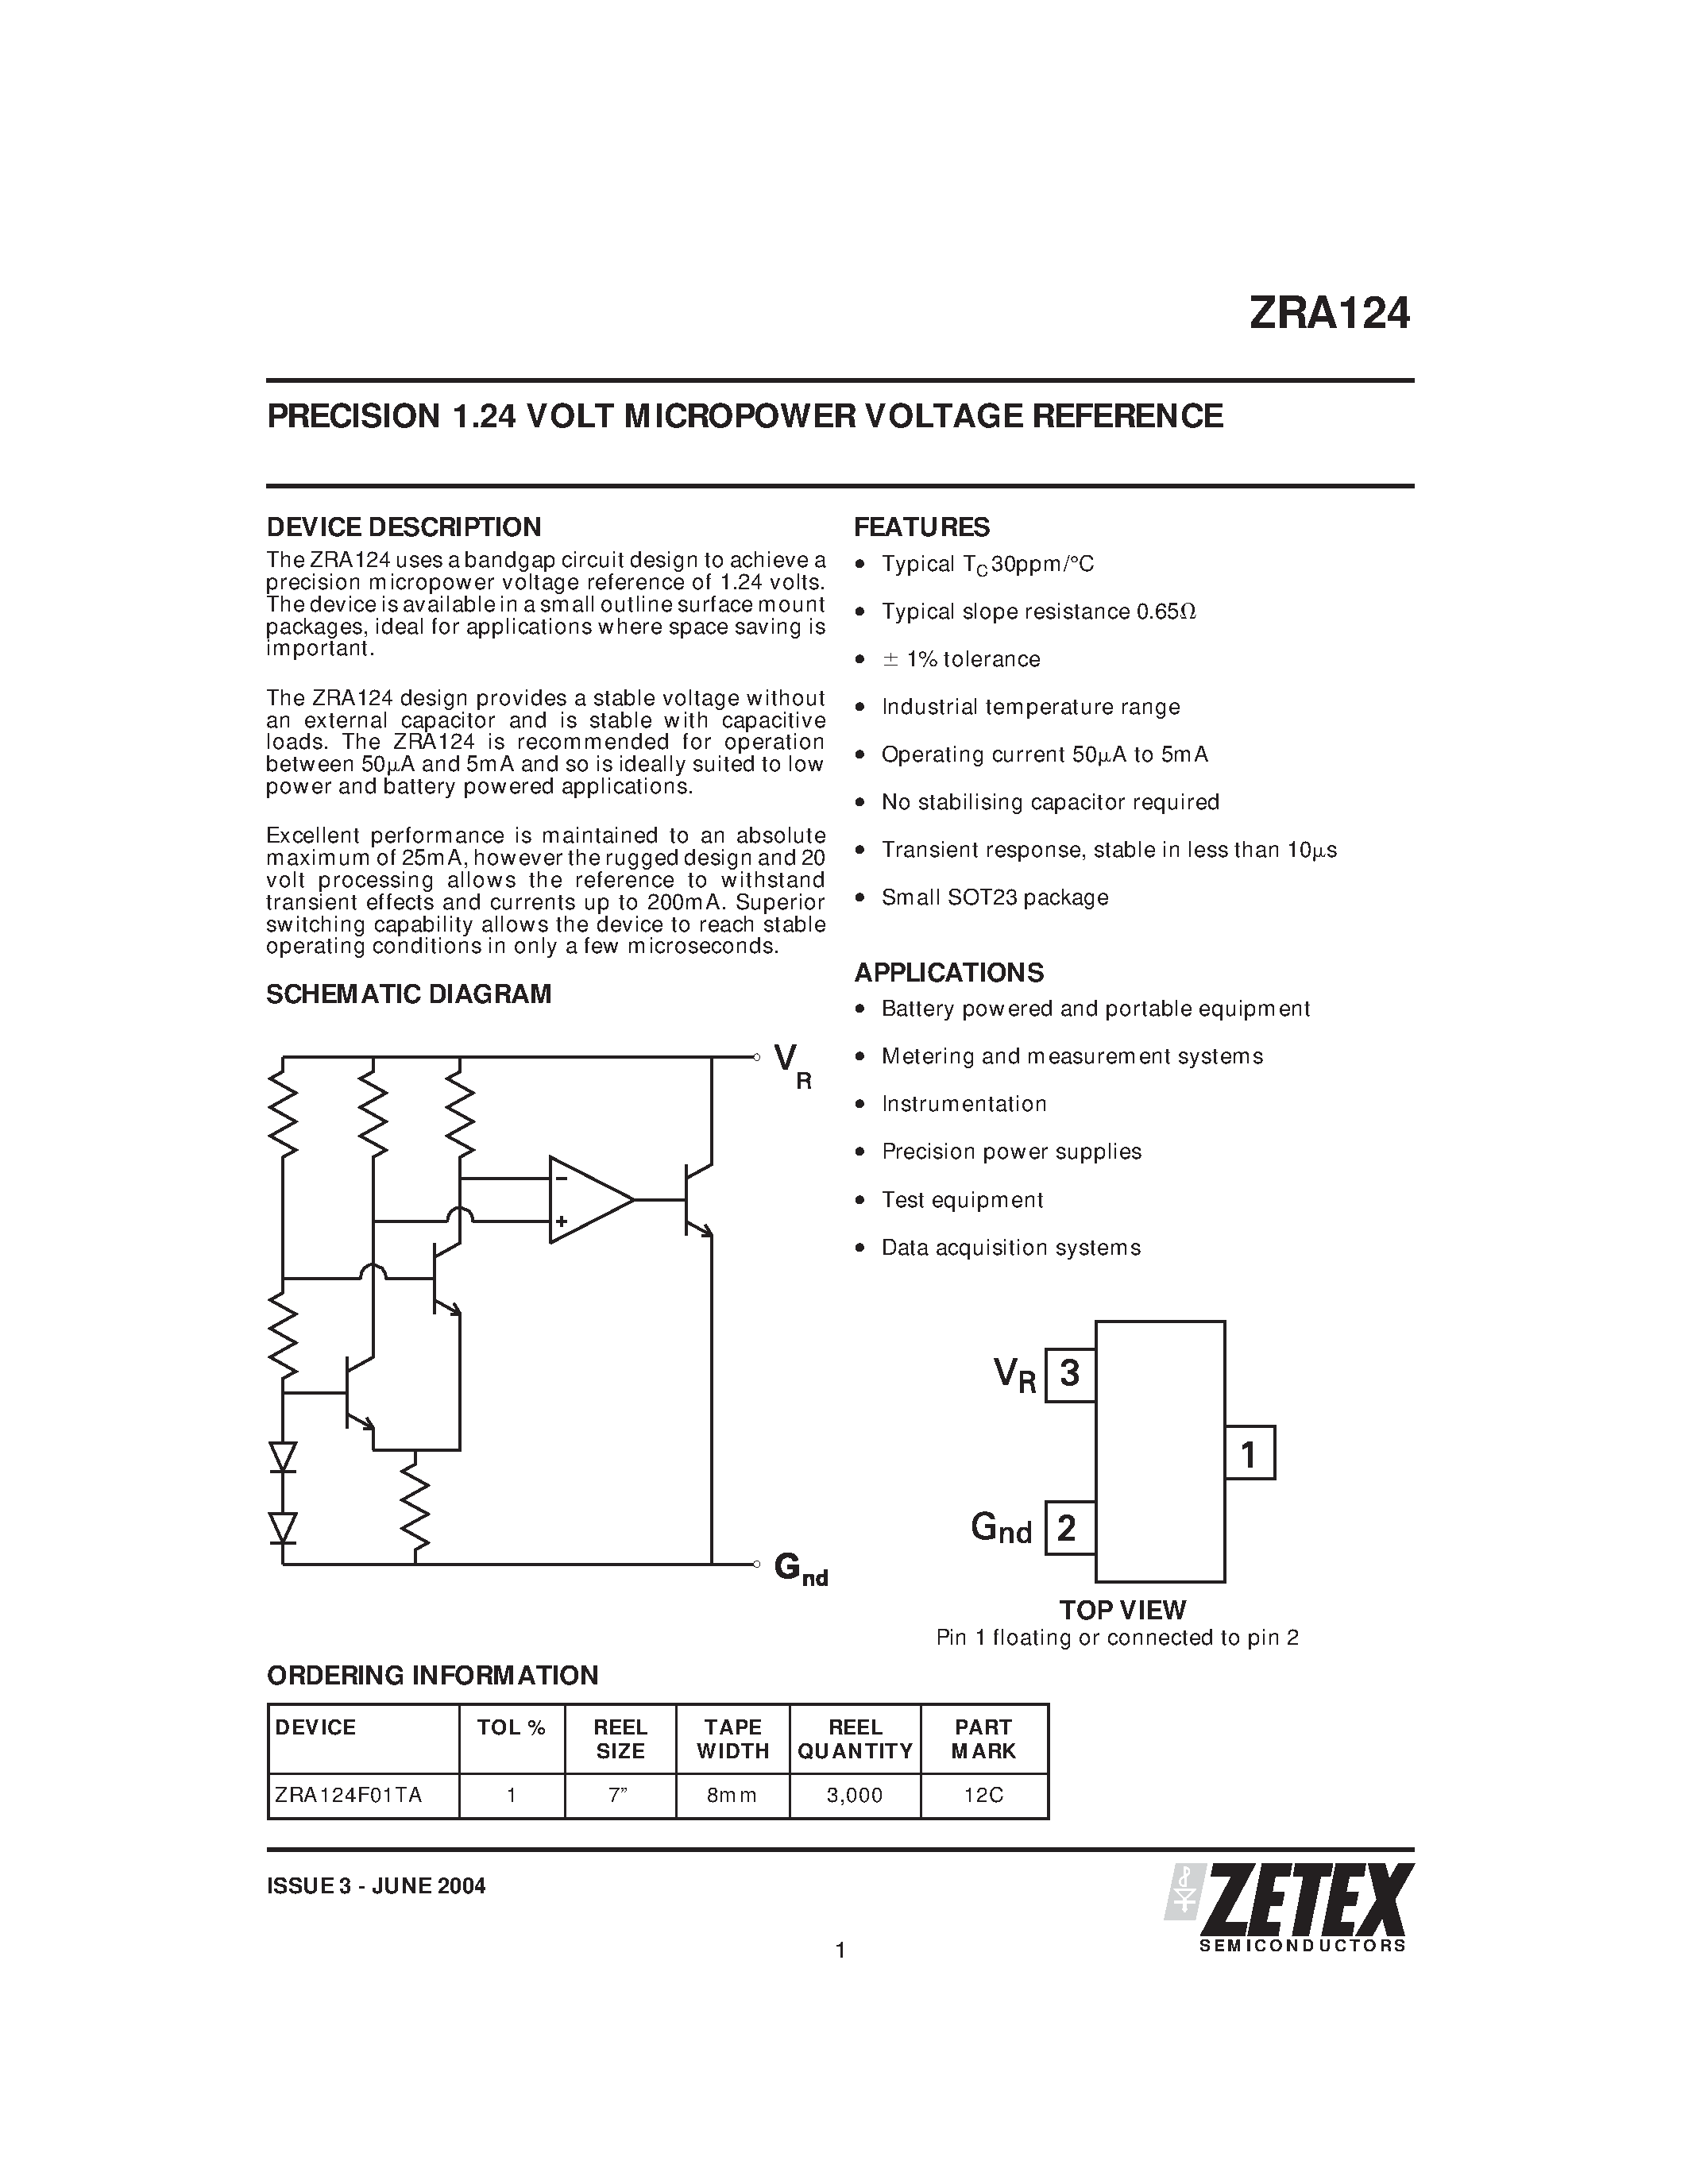 Даташит ZRA124F01TA - PRECISION 1.24 VOLT MICROPOWER VOLTAGE REFERENCE страница 1